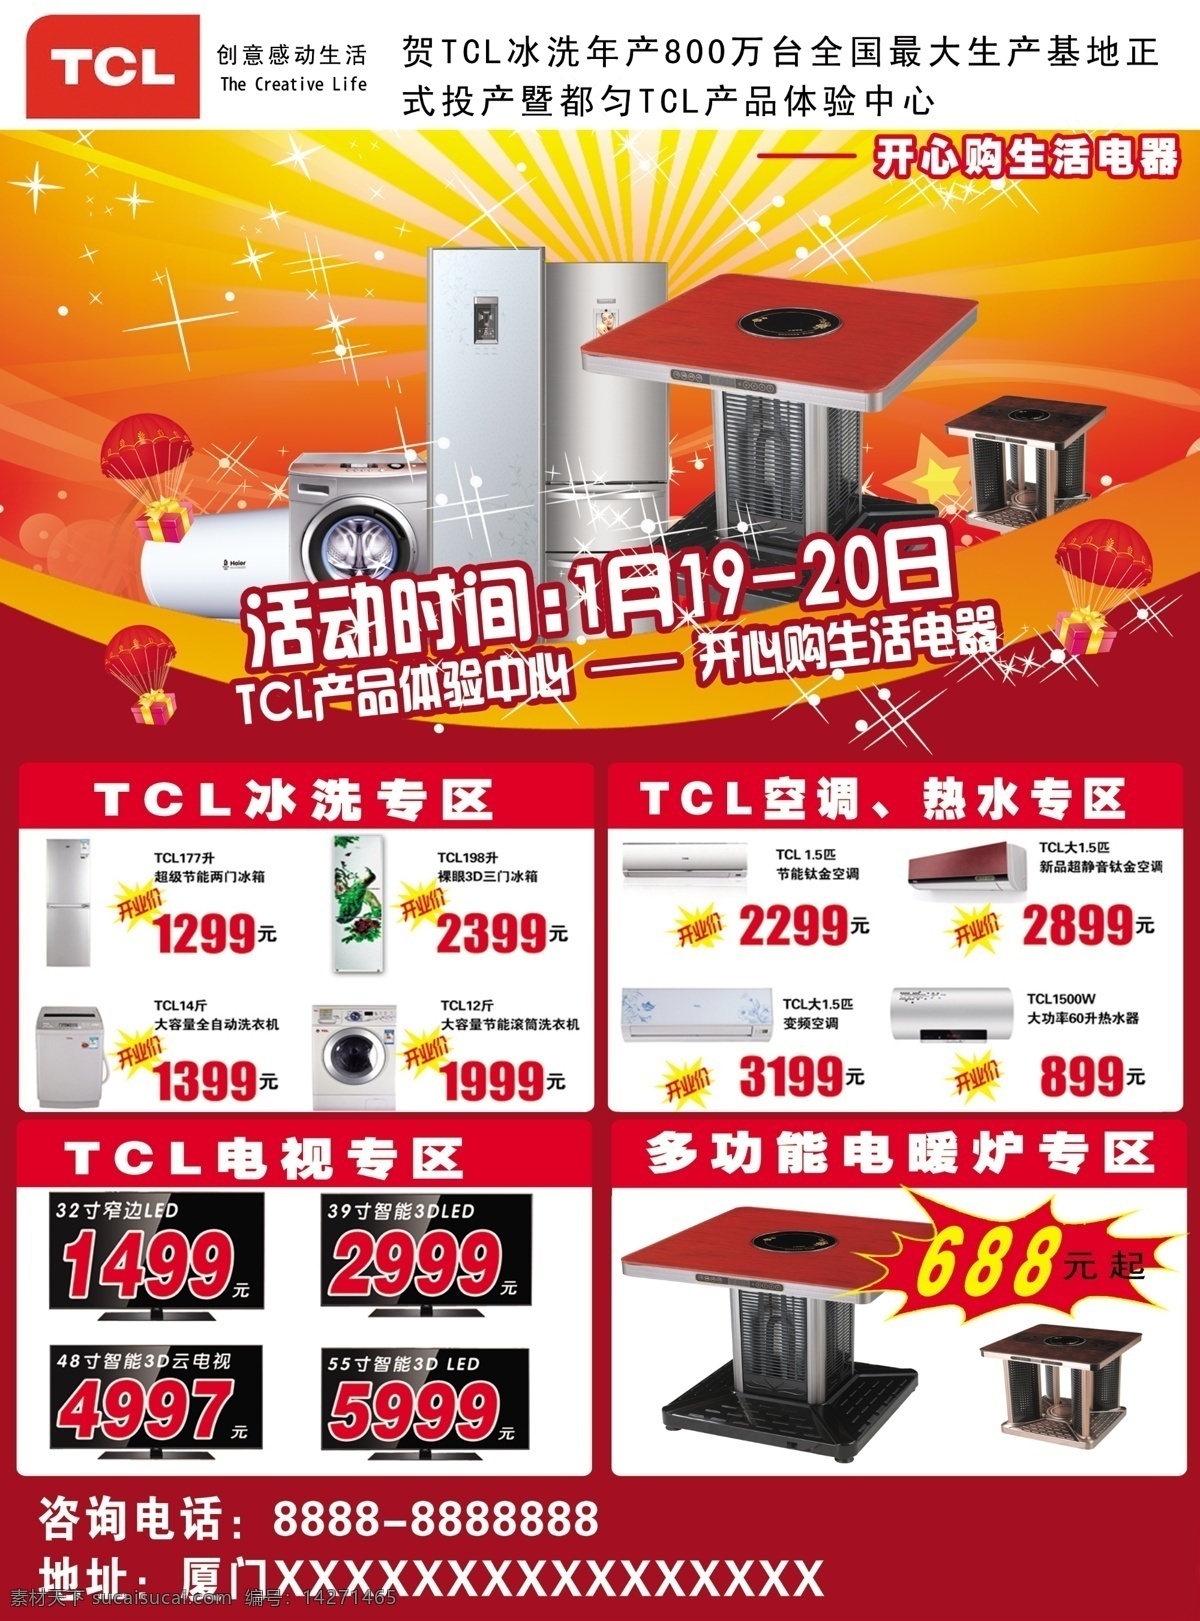 tcl电器 家用电器 电炉 电冰箱 电器大酬宾 电器 其他模版 广告设计模板 源文件